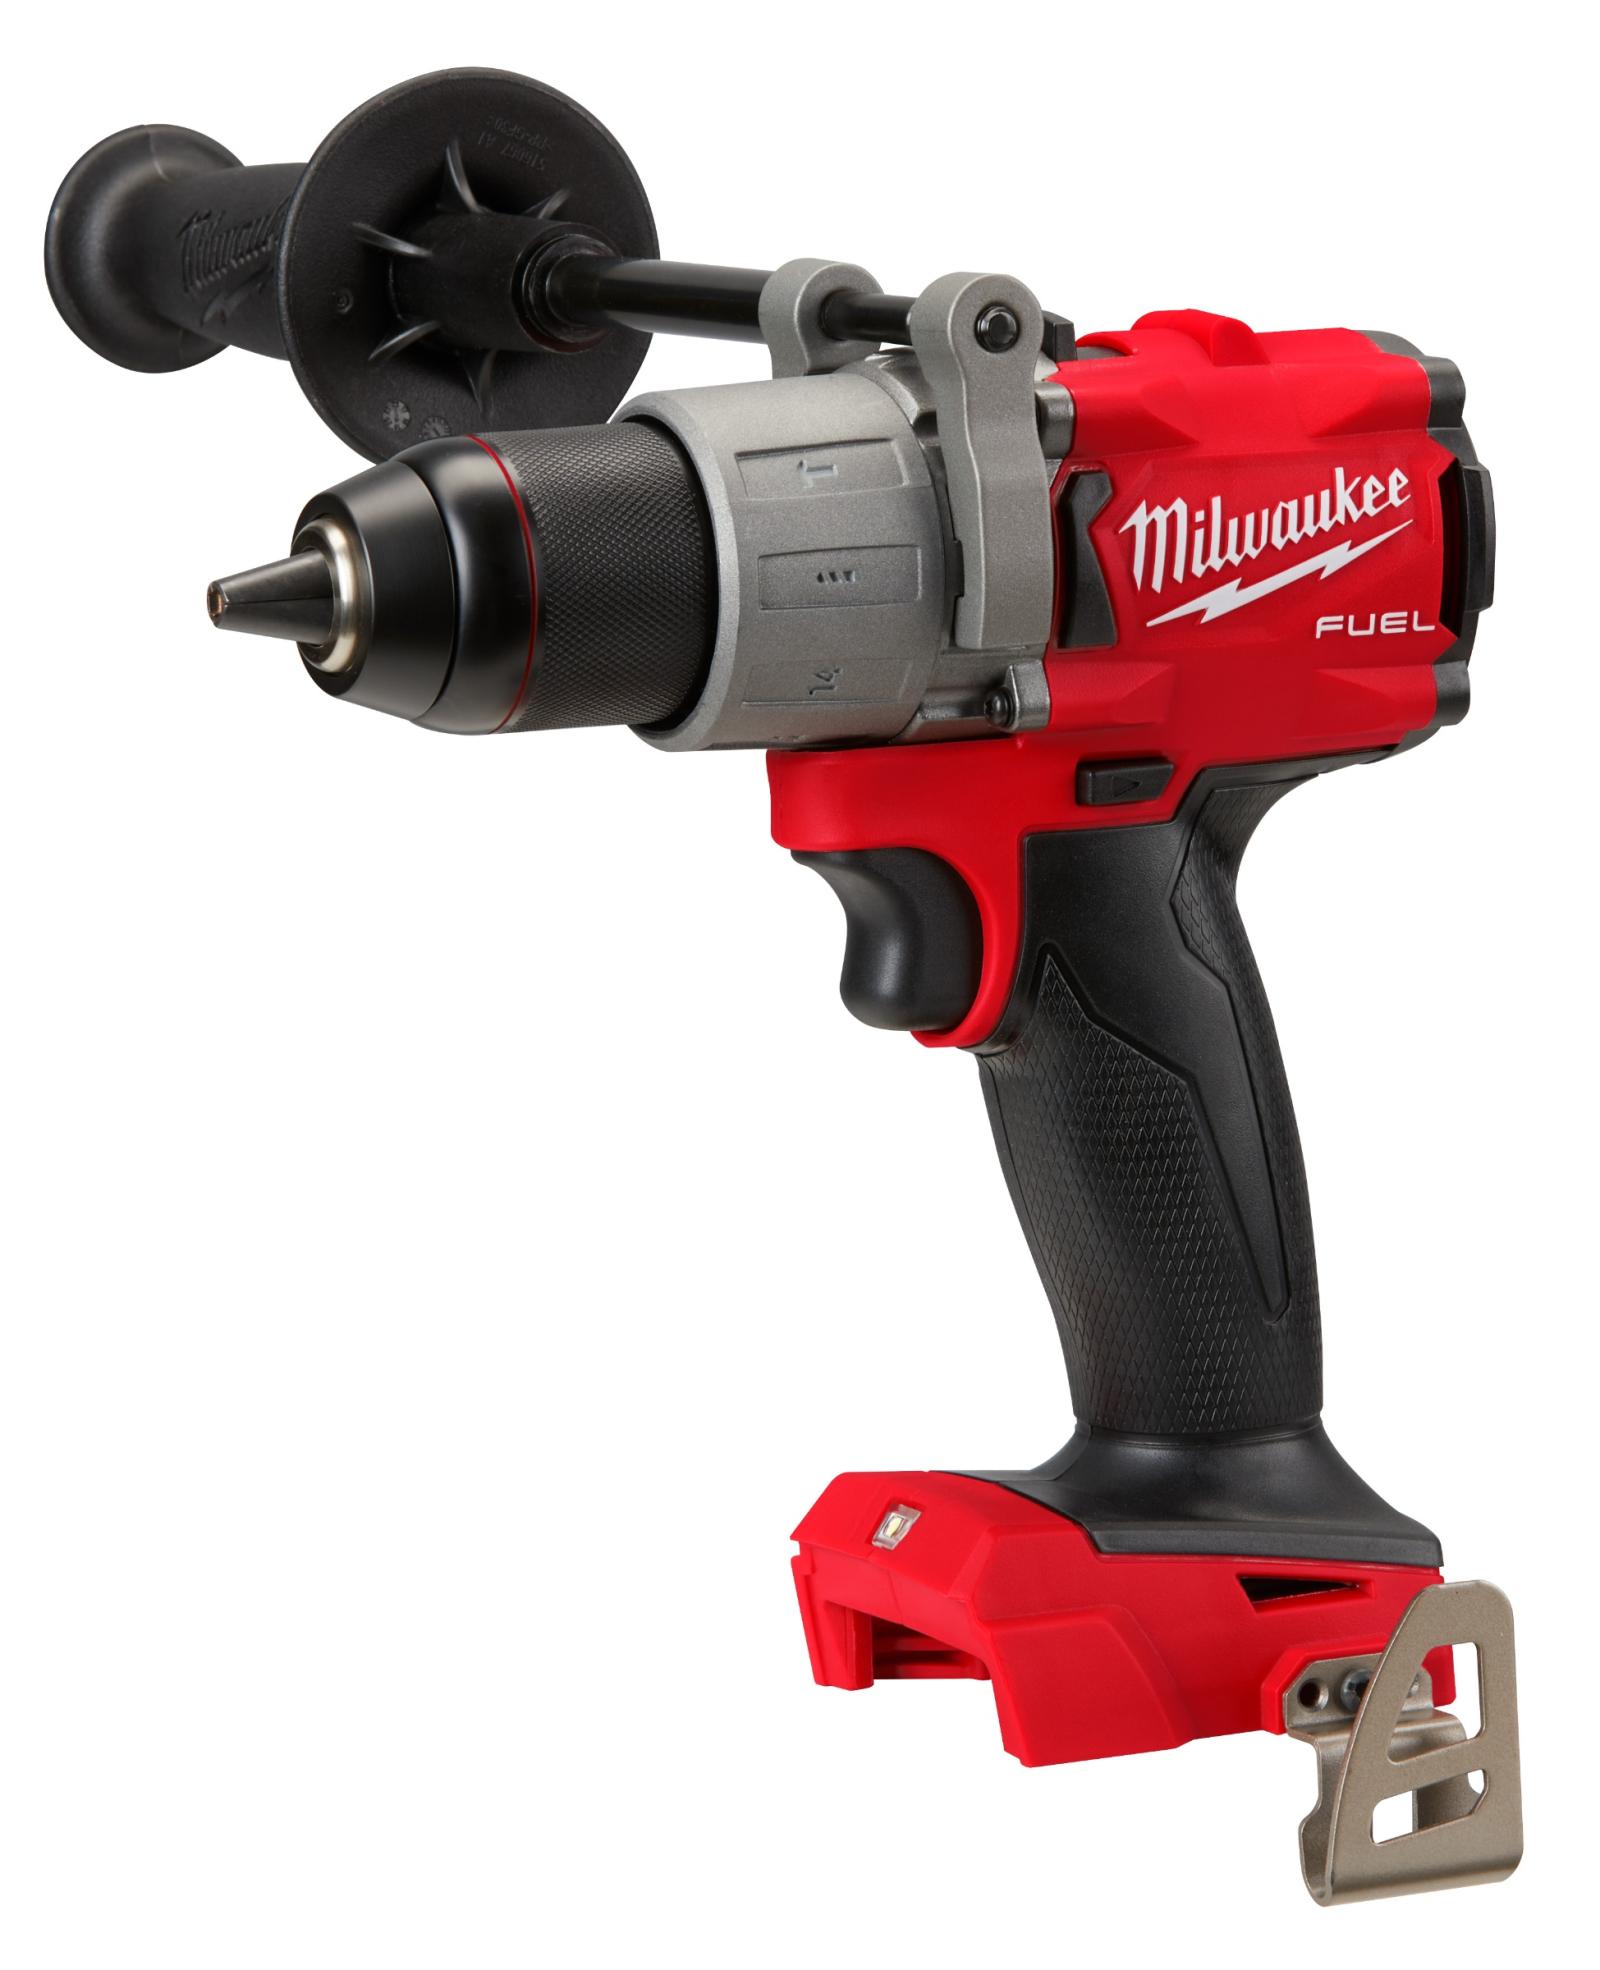 Milwaukee M18 Fuel 1/2" Hammer Drill Kit